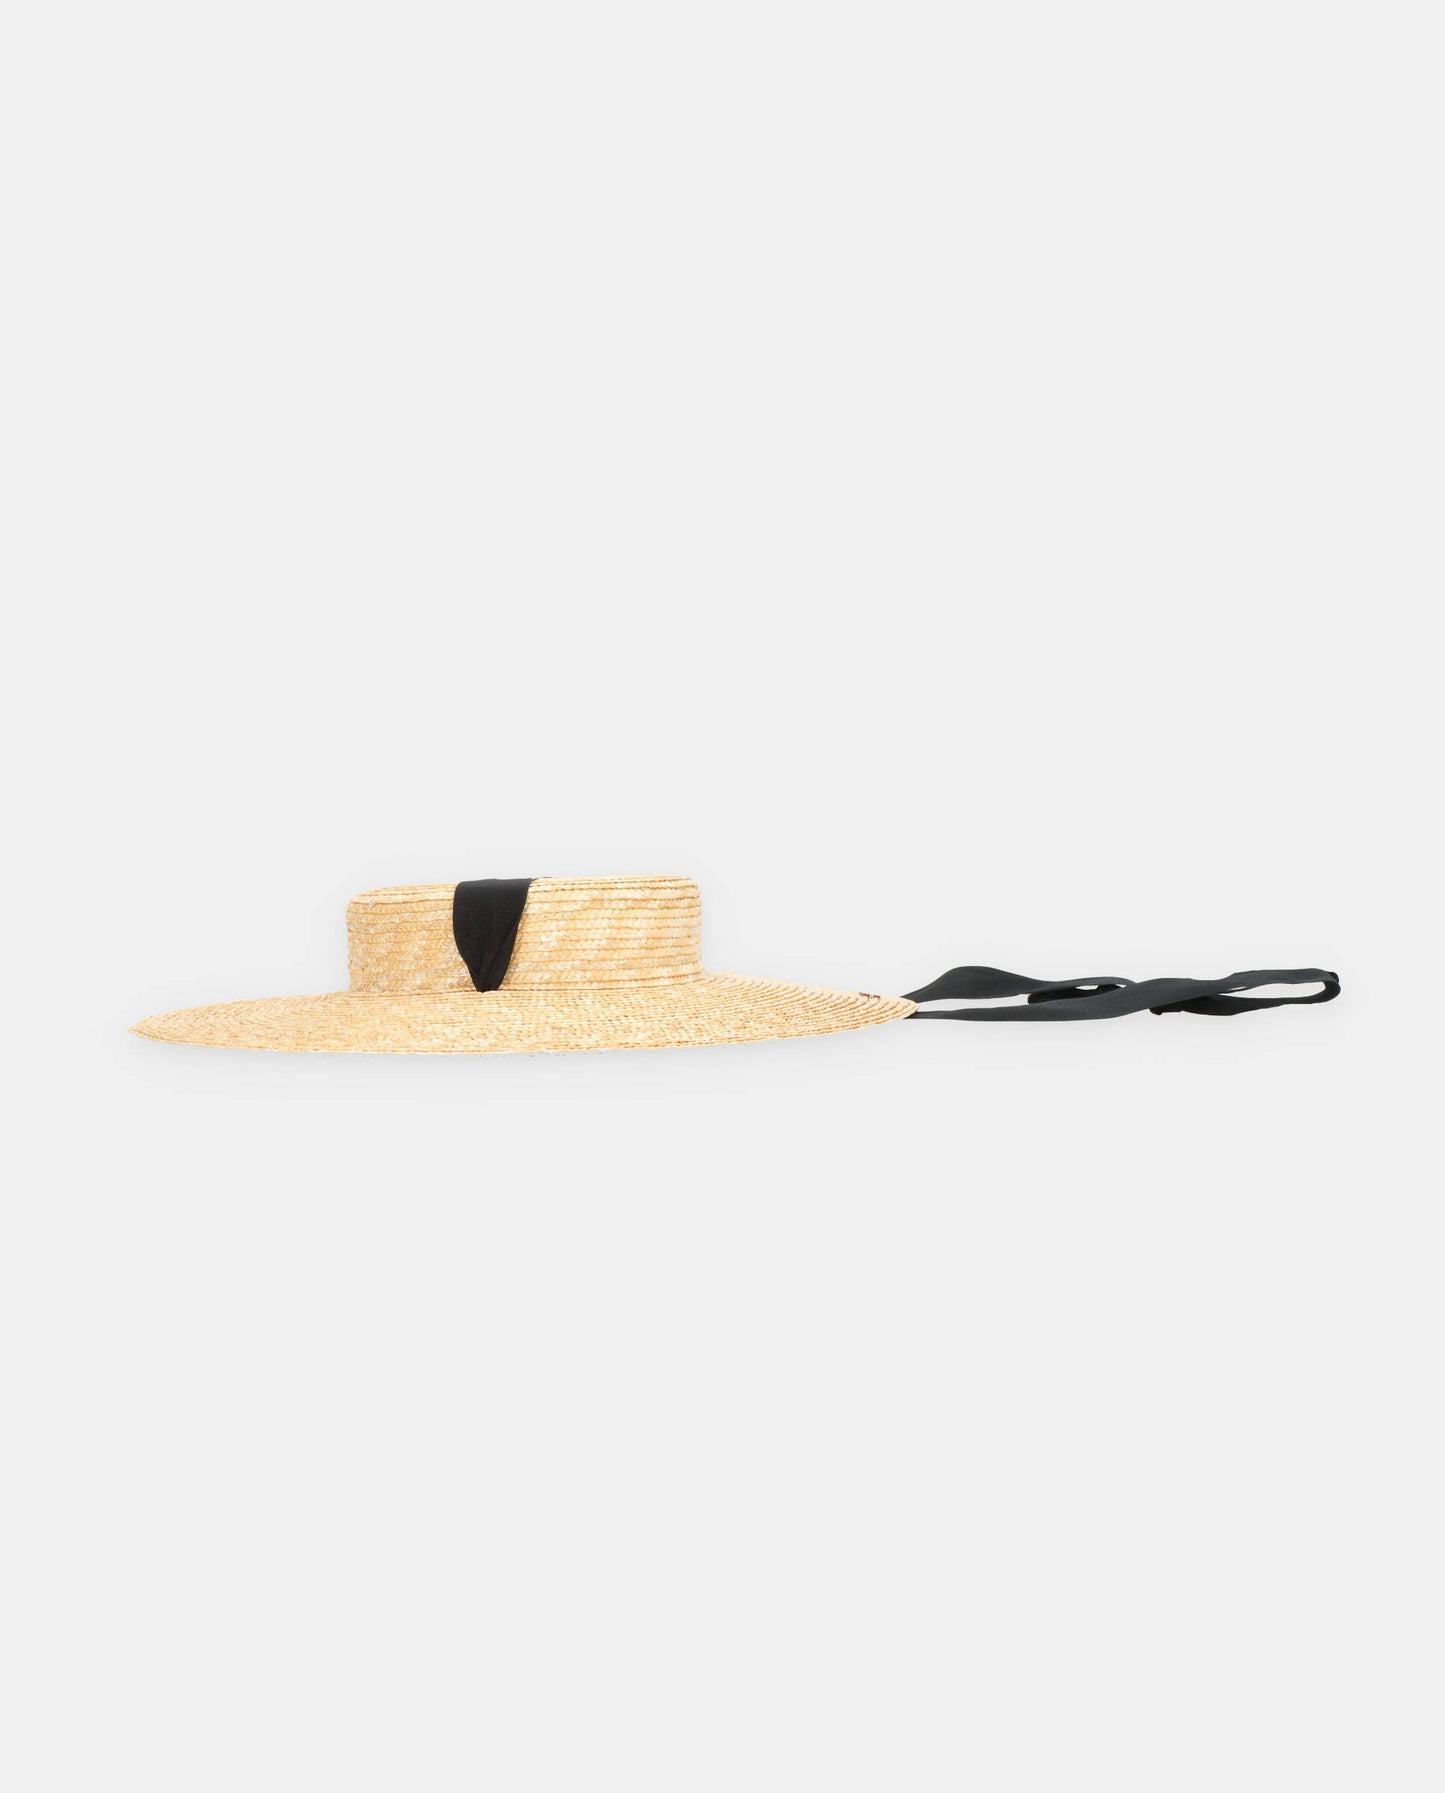 Sombrero de Paja Andalusian/Cordobes